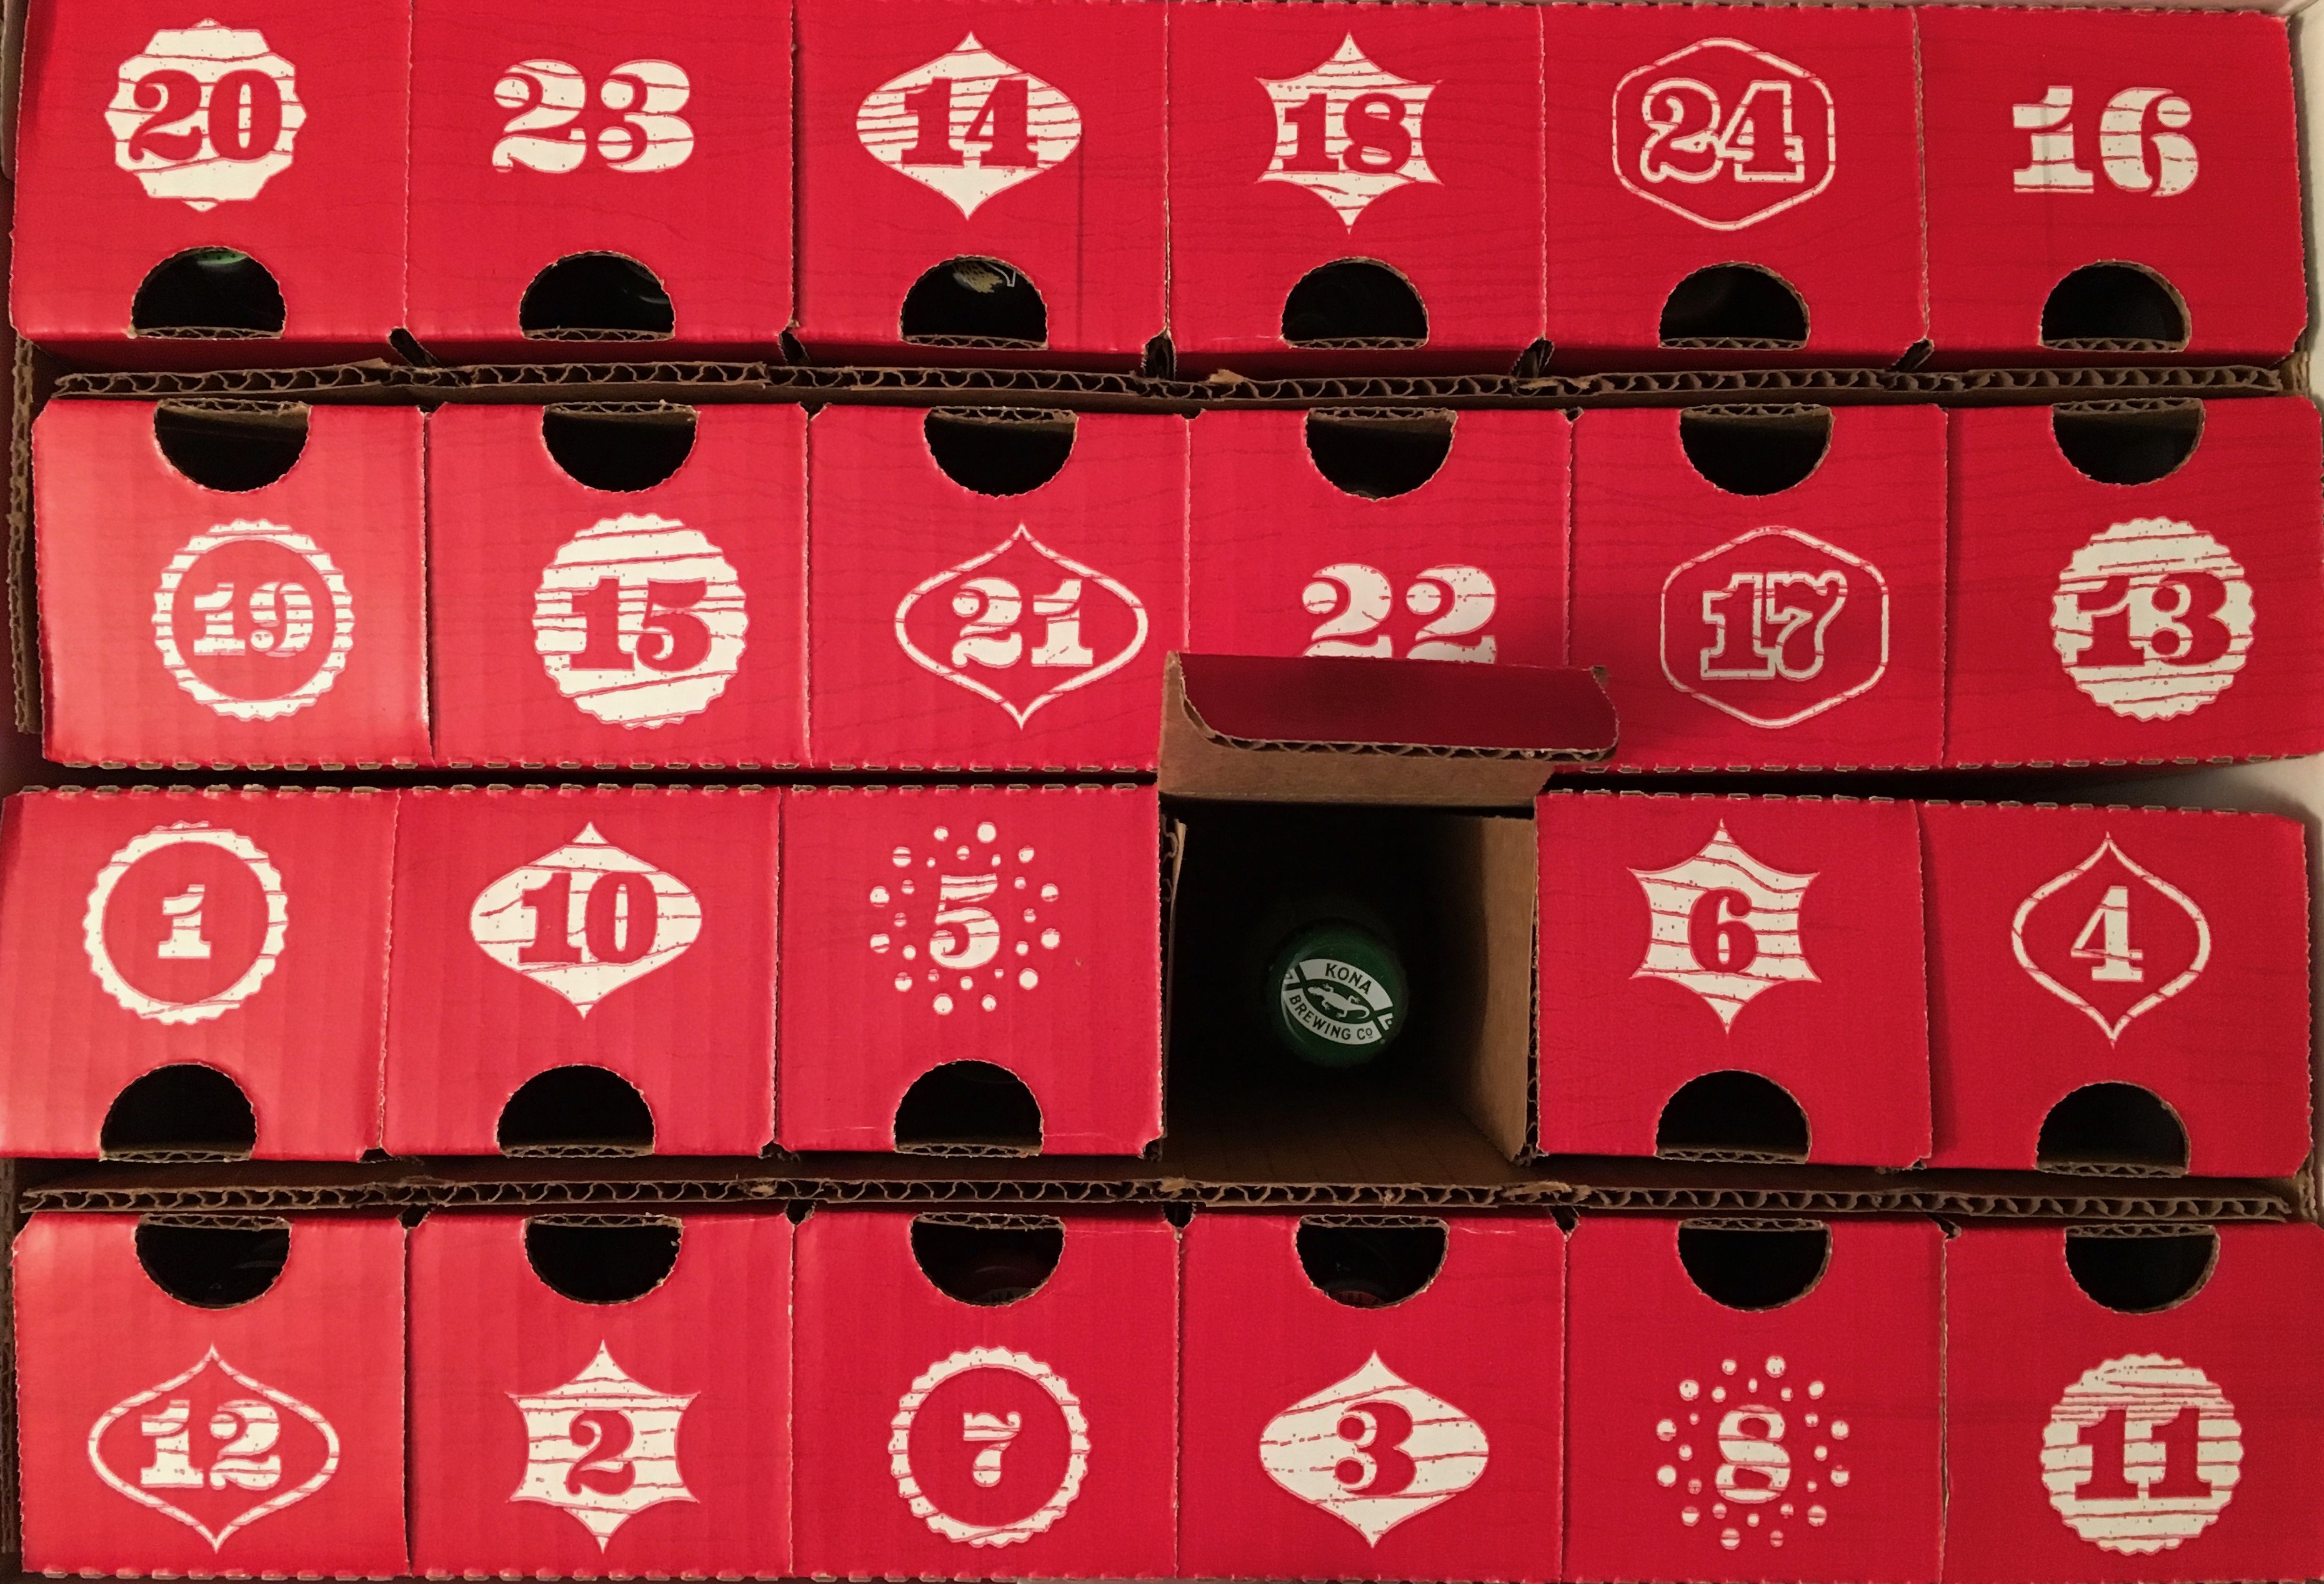 BRWBOX Holiday Craft Beer Calendar – A Beer Drinkers Advent Calendar